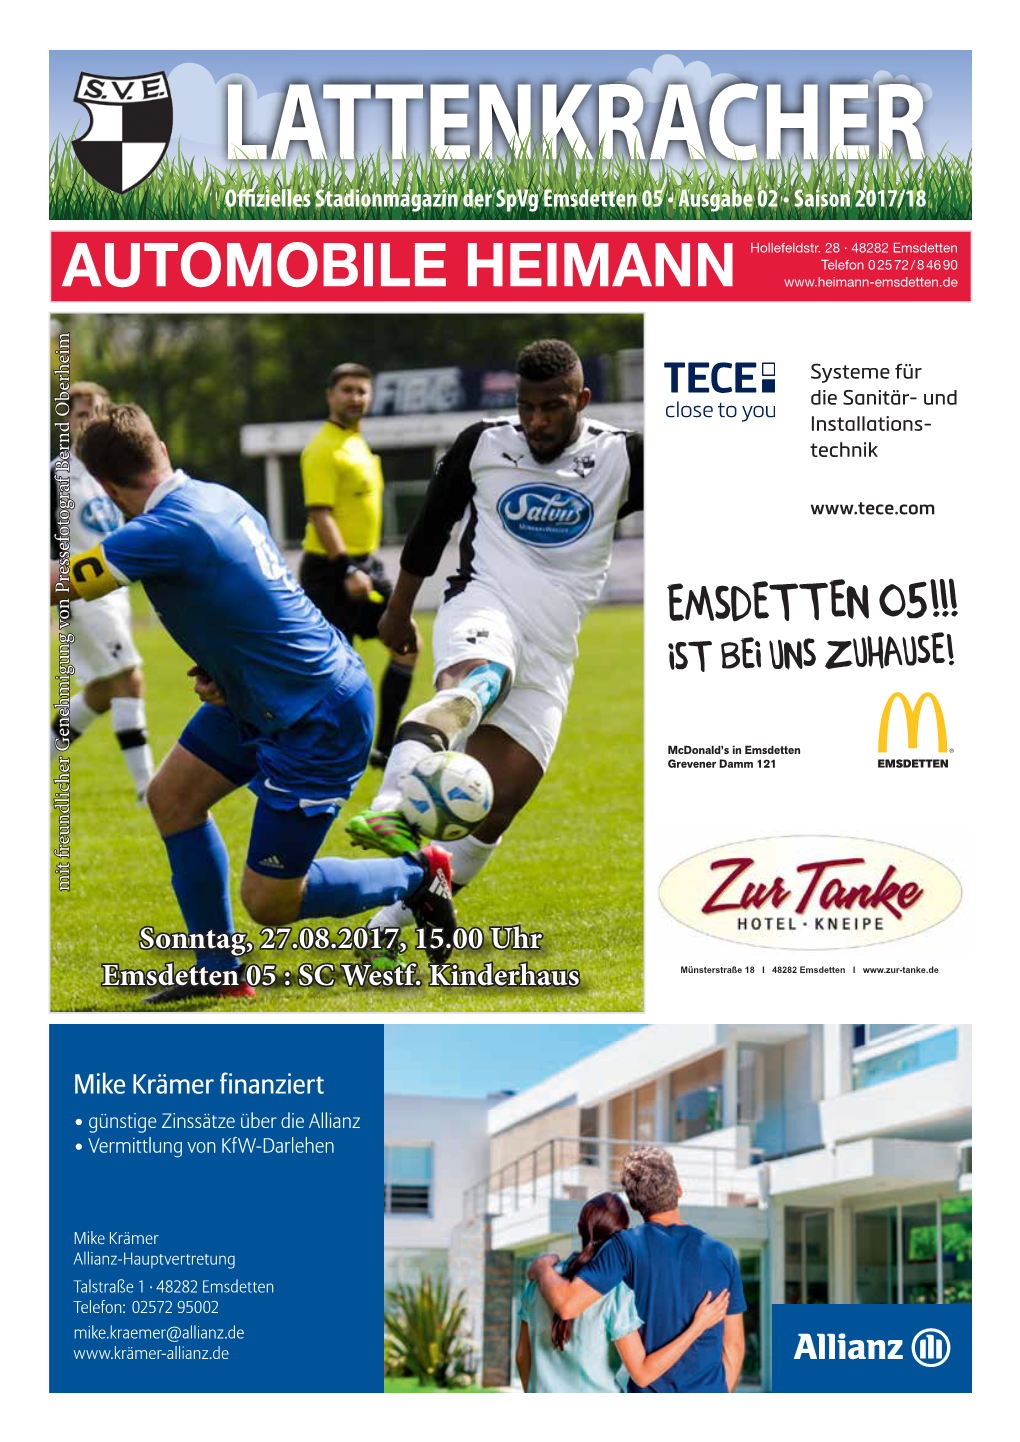 LATTENKRACHER Offizielles Stadionmagazin Der Spvg Emsdetten 05 • Ausgabe 02 • Saison 2017/18